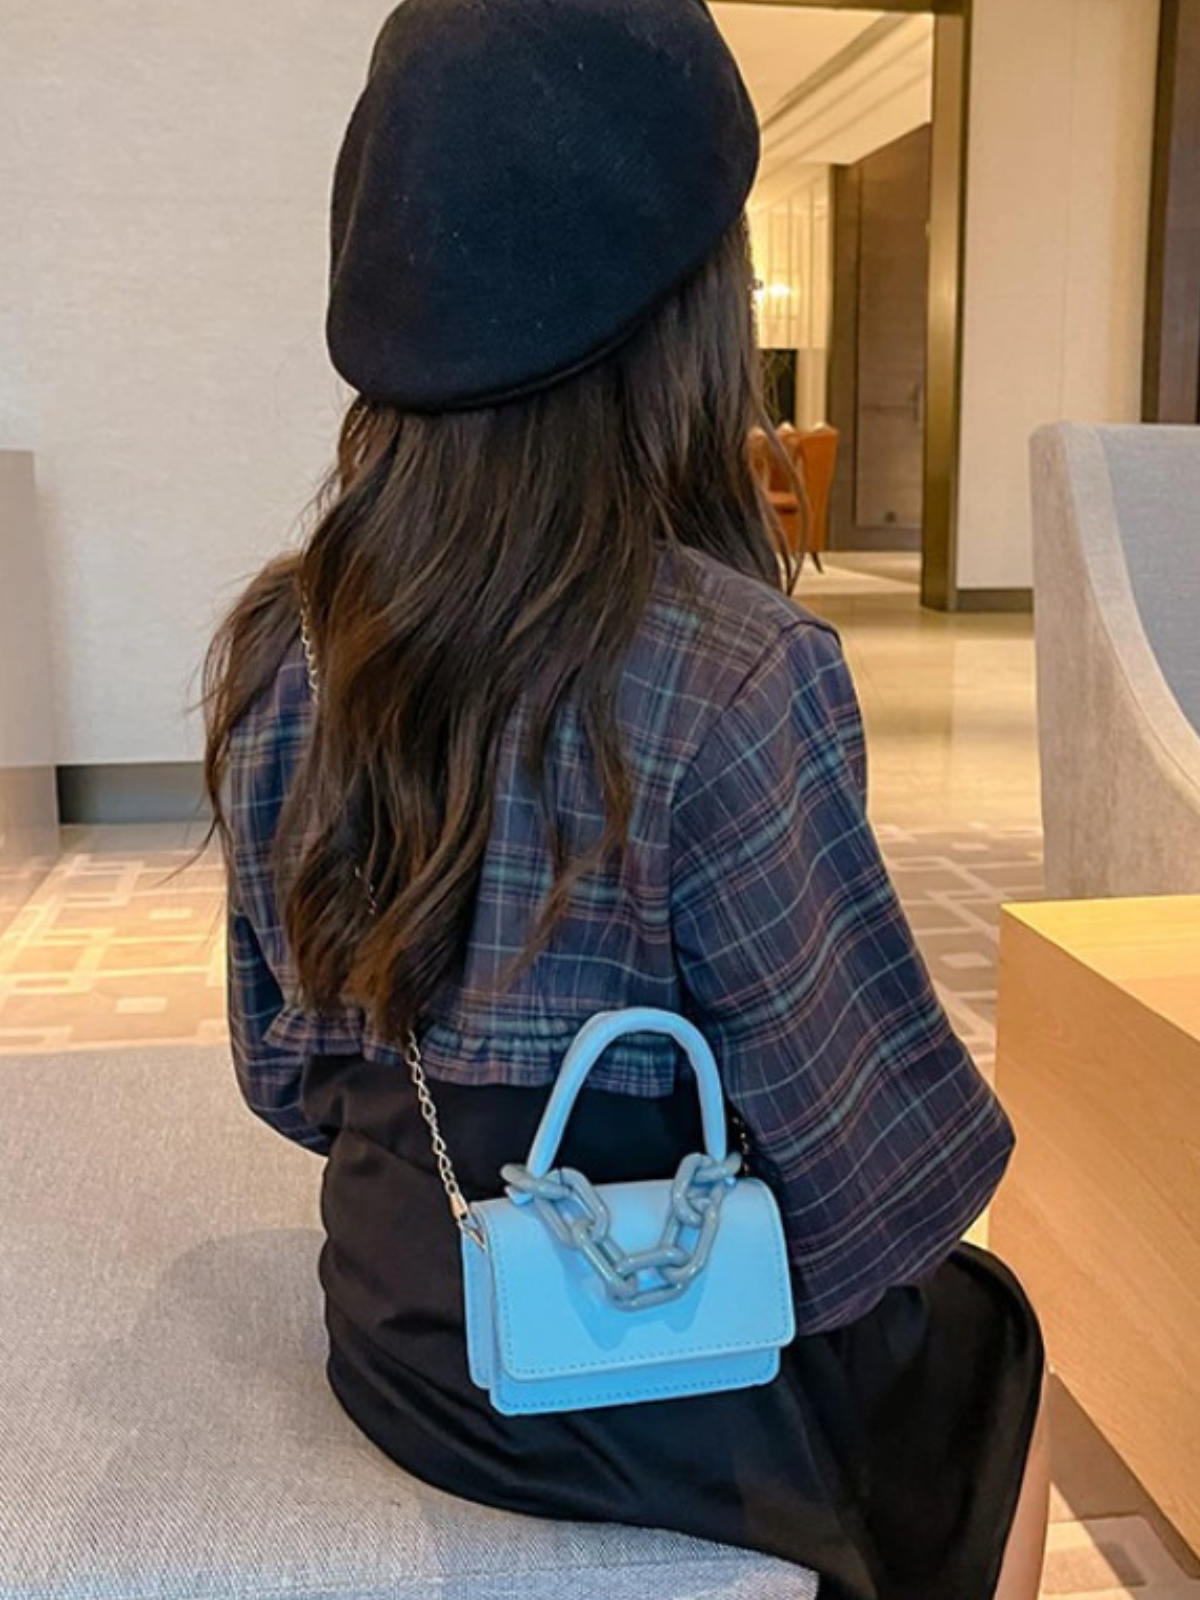 Mia Belle Girls Mini Shoulder Handbag | Girls Accesories